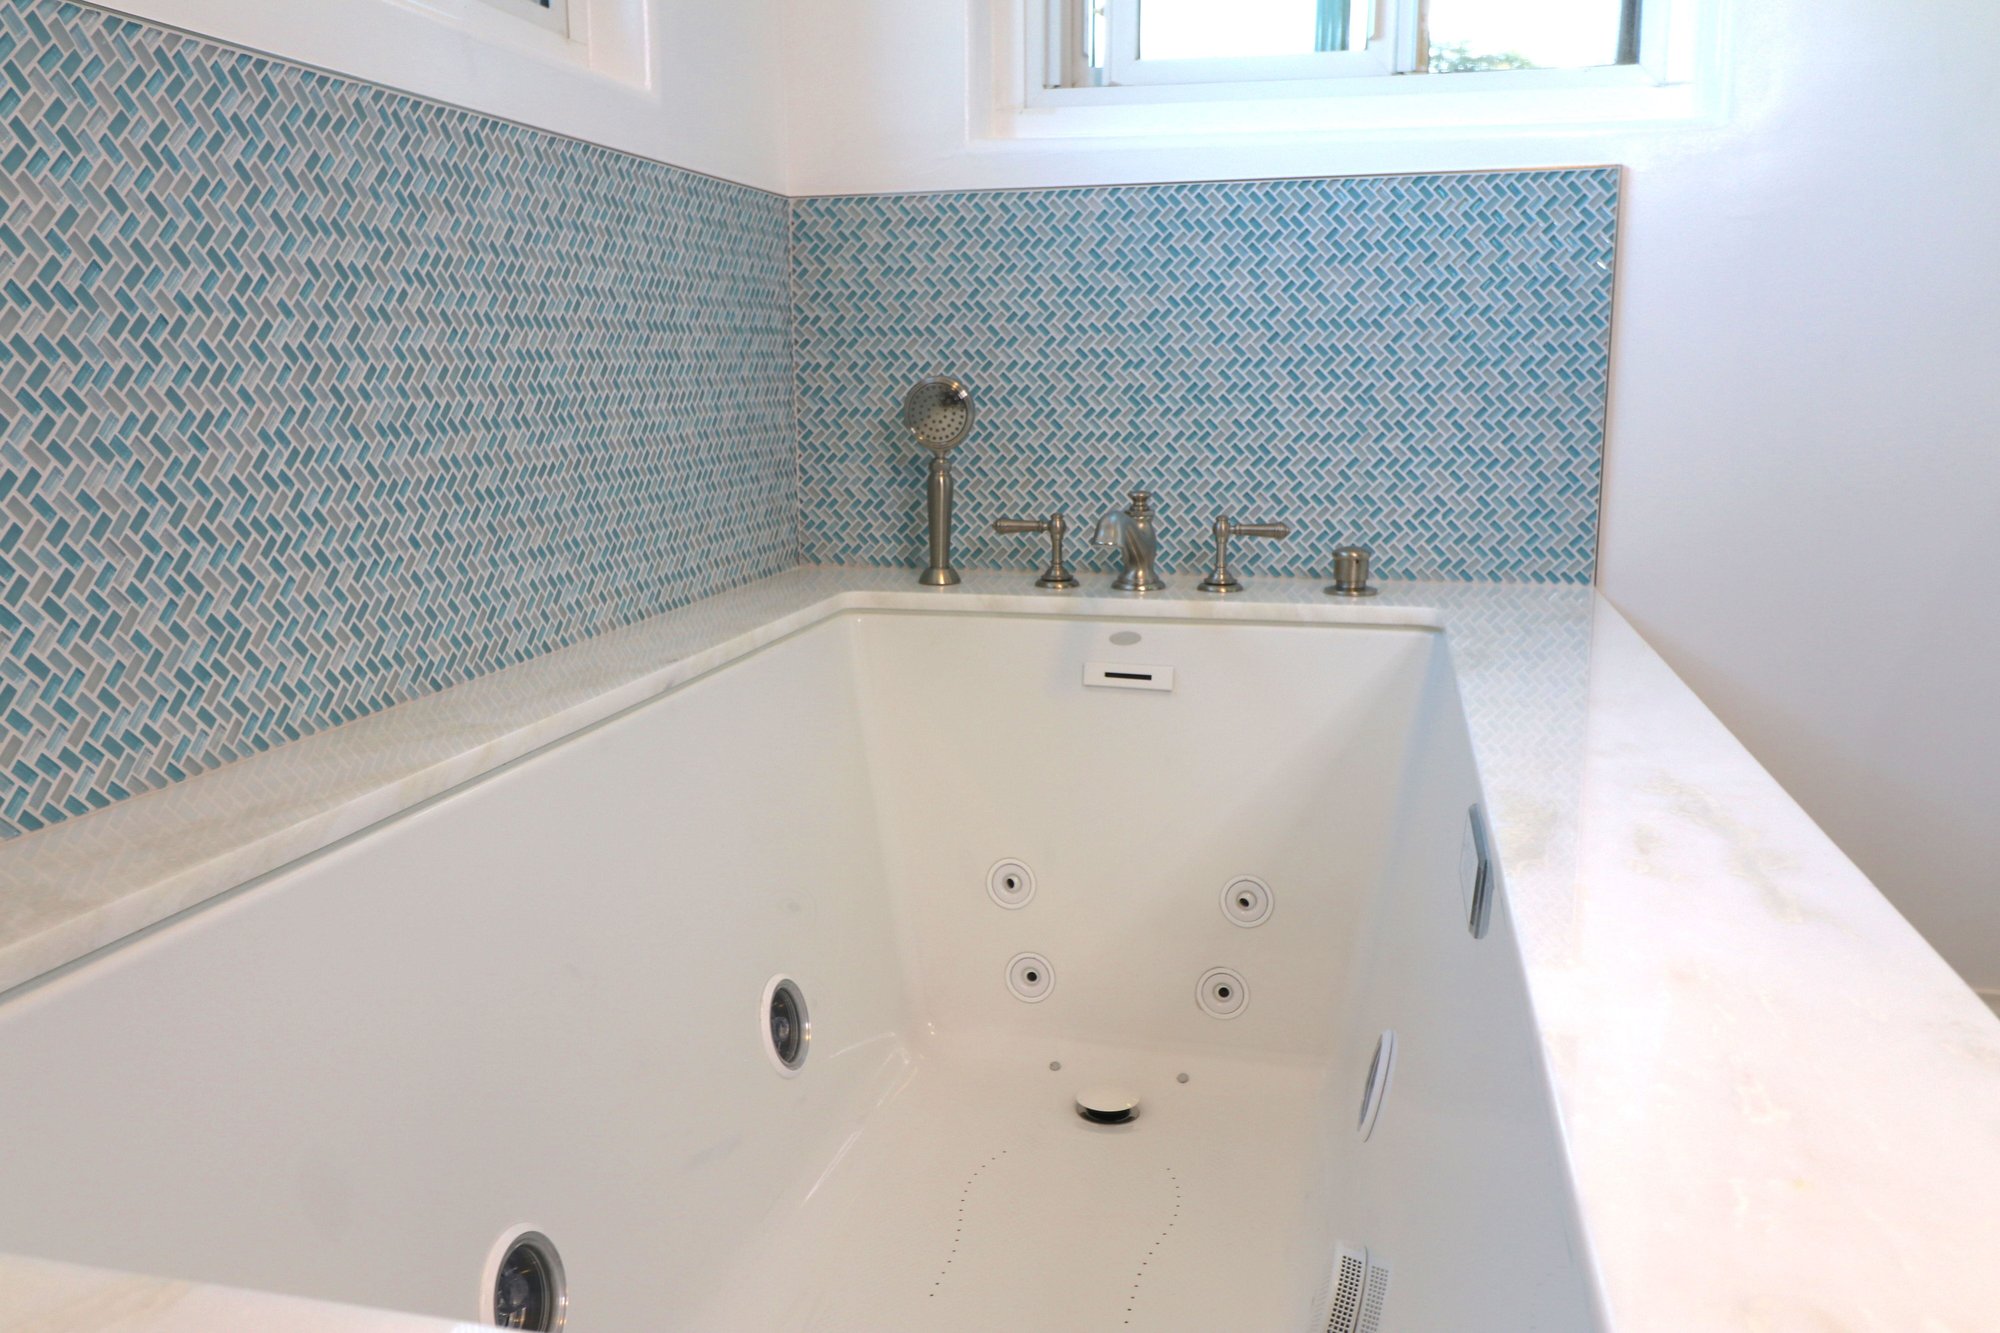 quartz jacuzzi tub - Master bathroom remodel - best south bay - bay cities construction